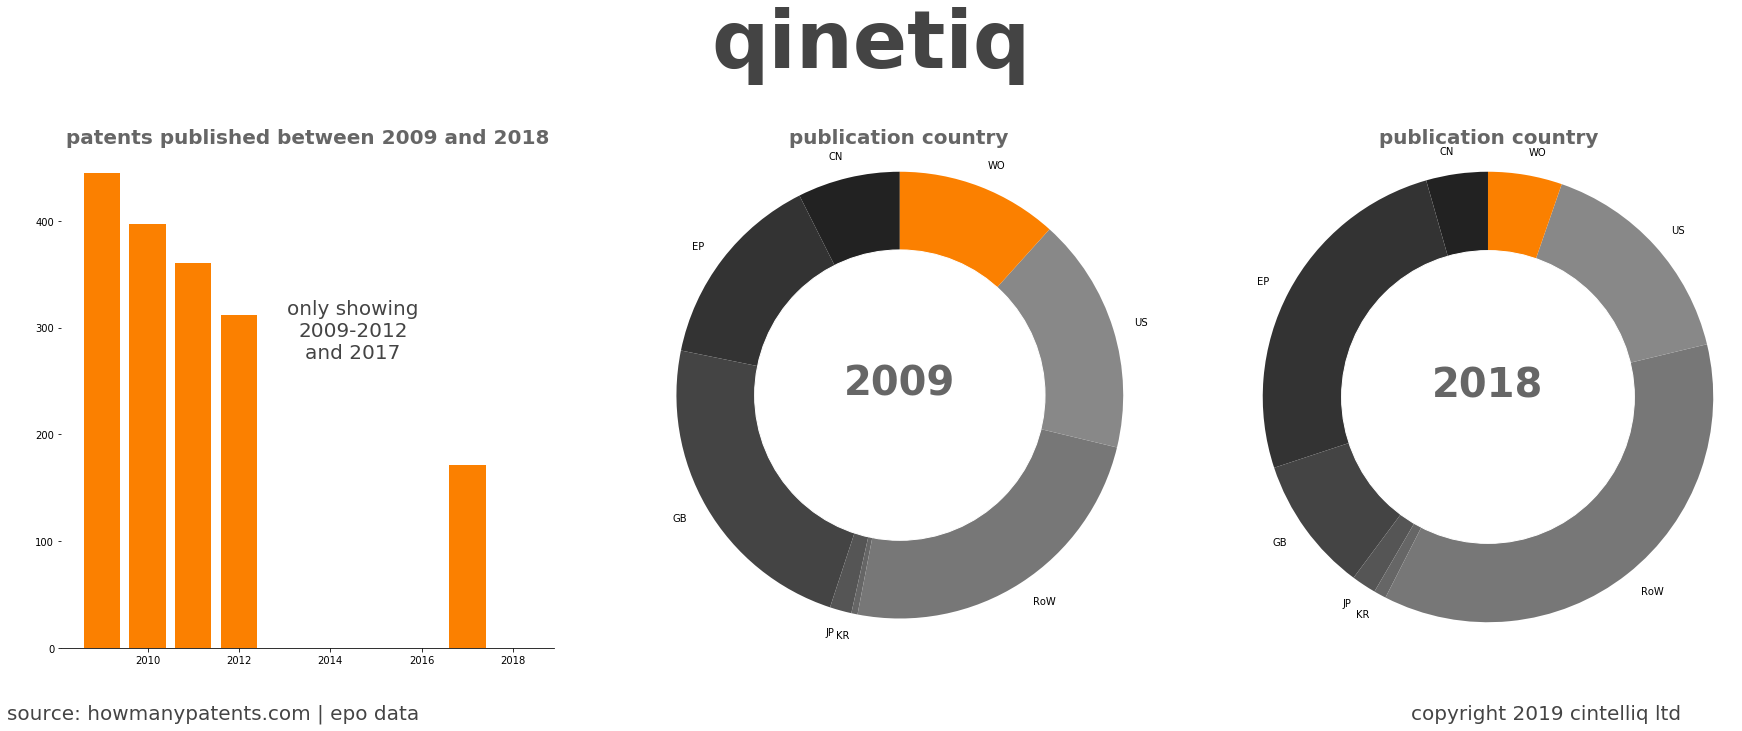 summary of patents for Qinetiq